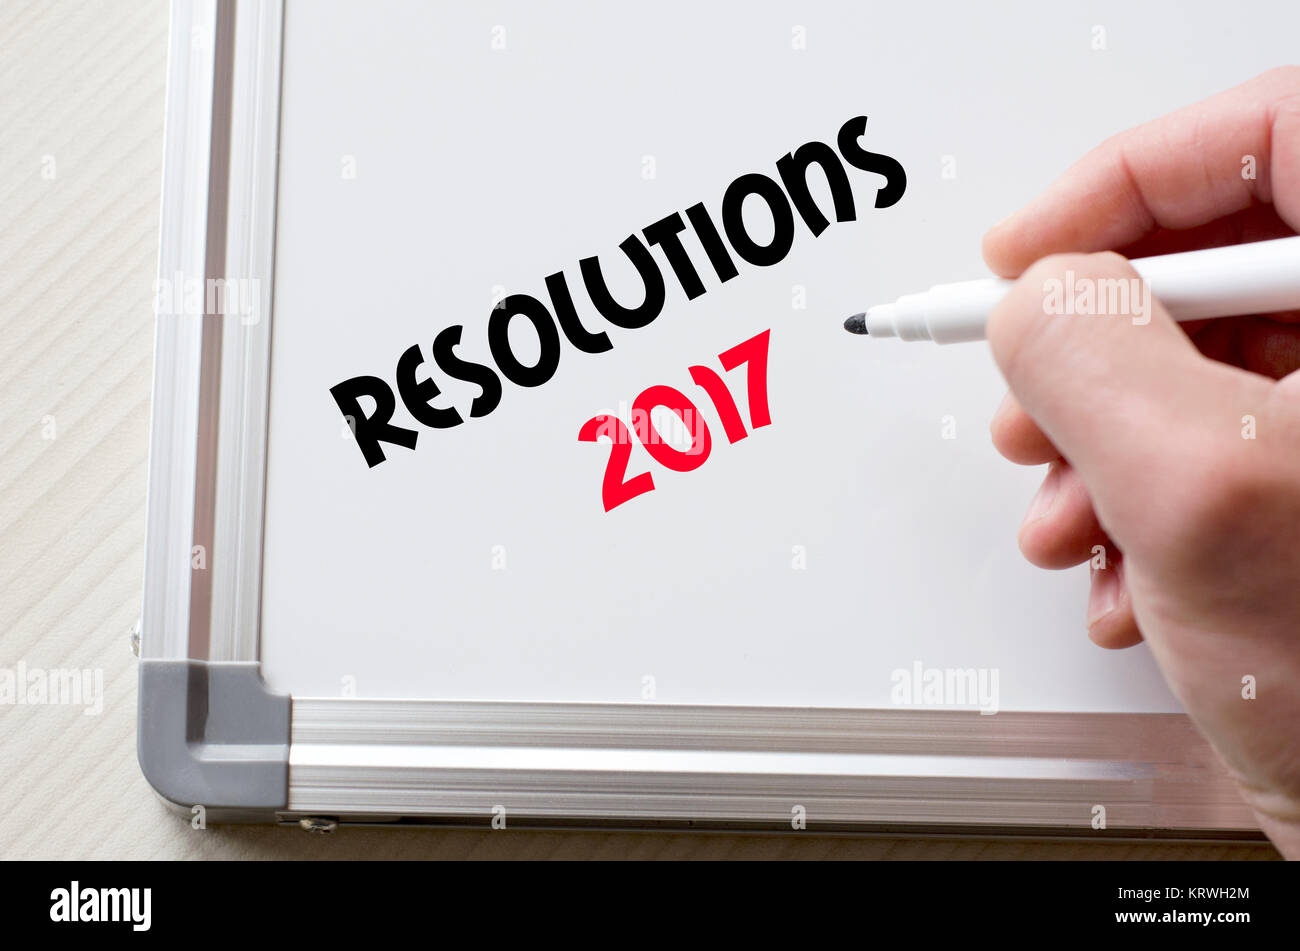 Resolutions 2017 written on whiteboard Stock Photo